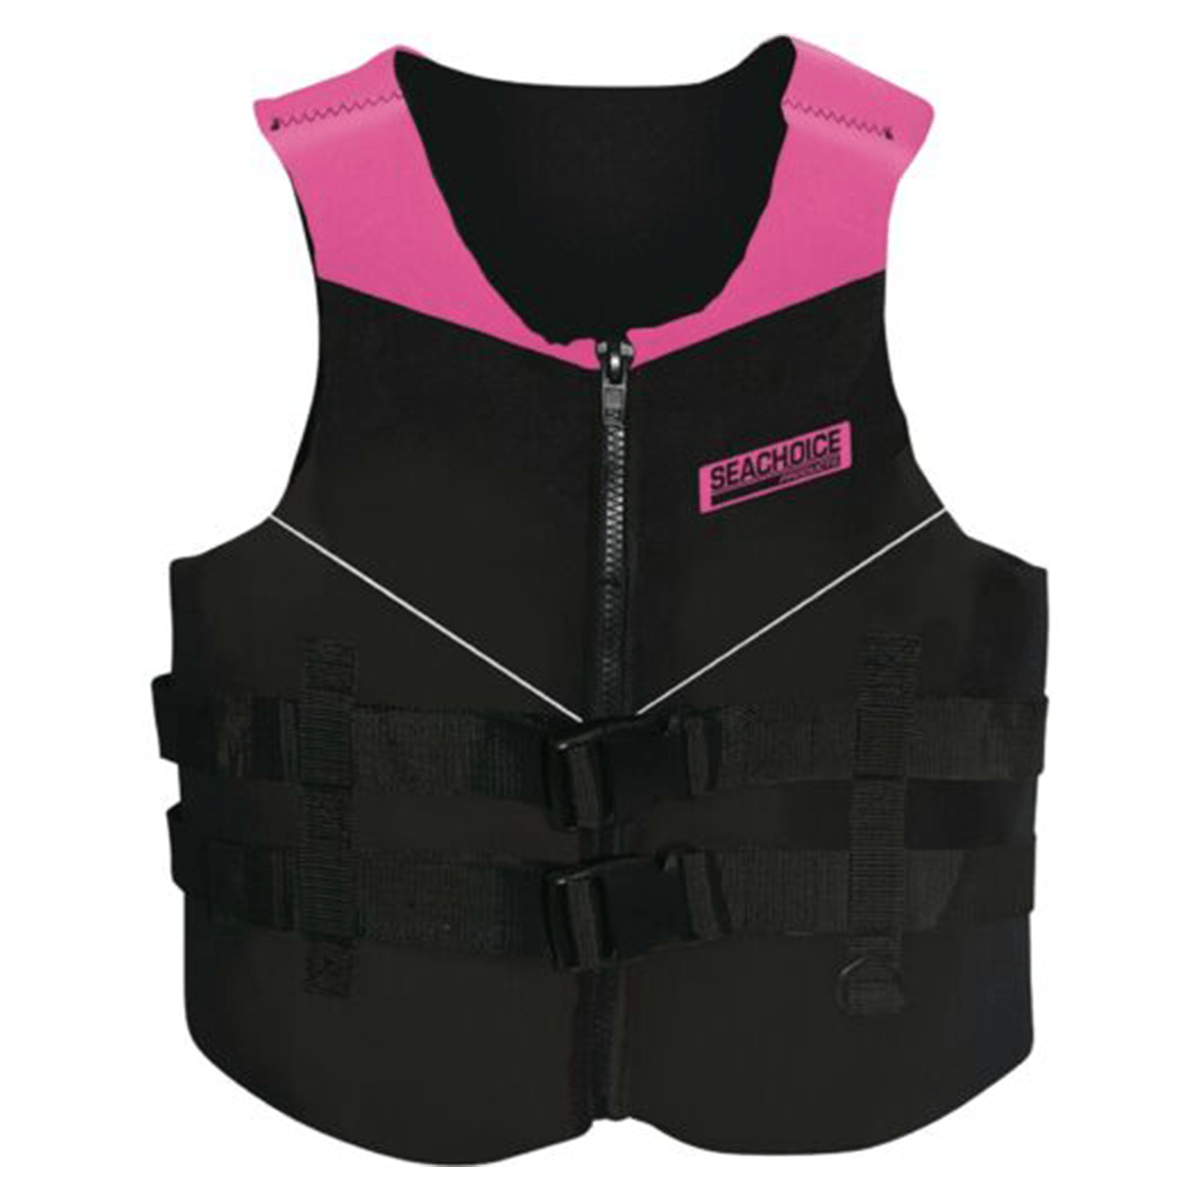 Seachoice Adult Neo CGA Life Jacket in Vest Pink/Black - BoardCo